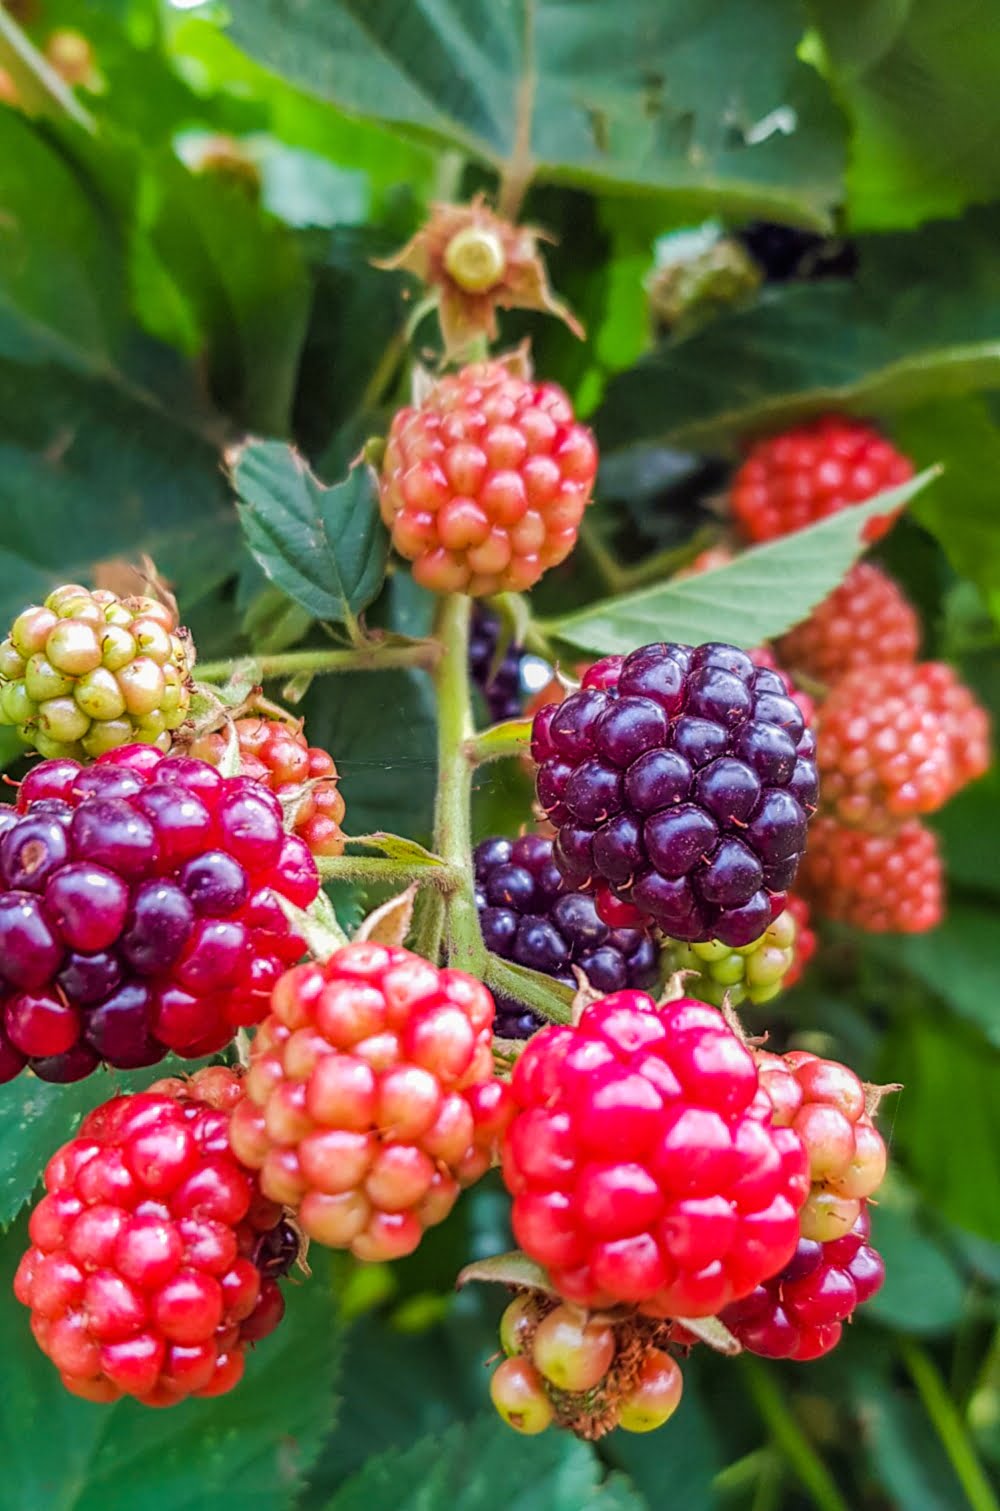 Expert tips on growing organic berries